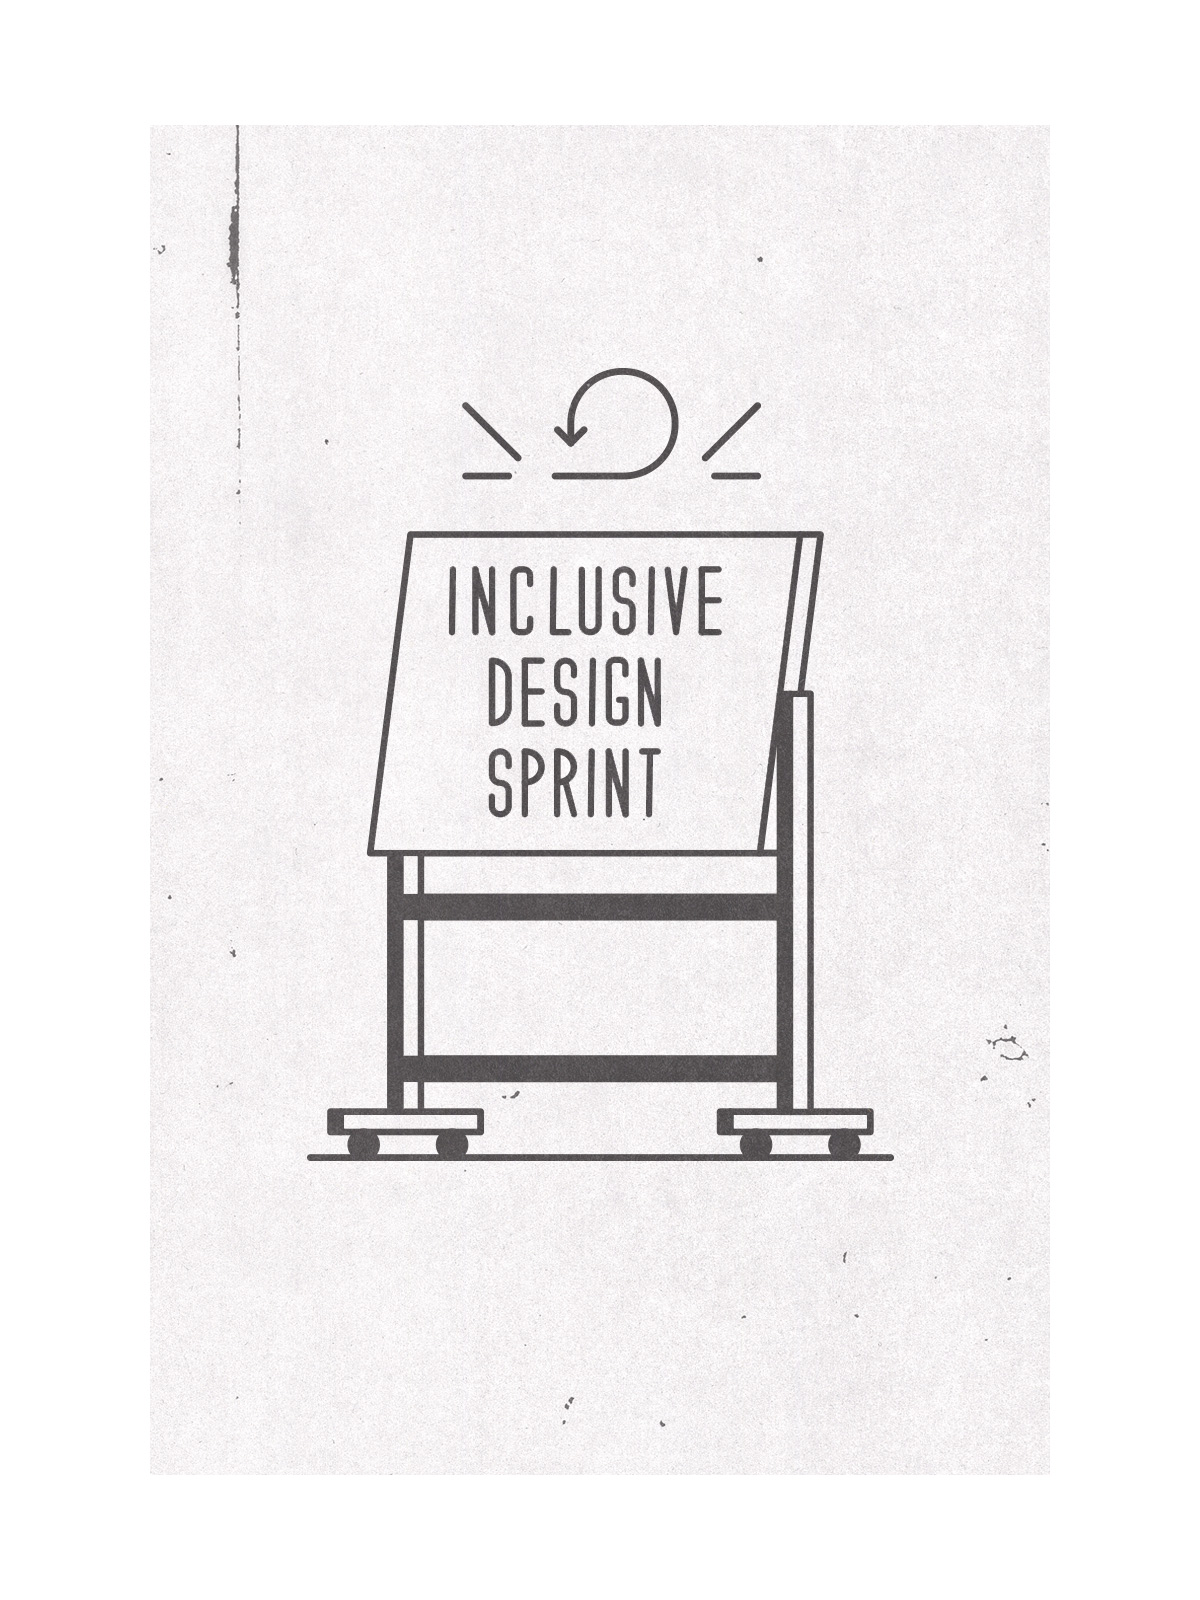 Inclusive Design Sprint written on whiteboard